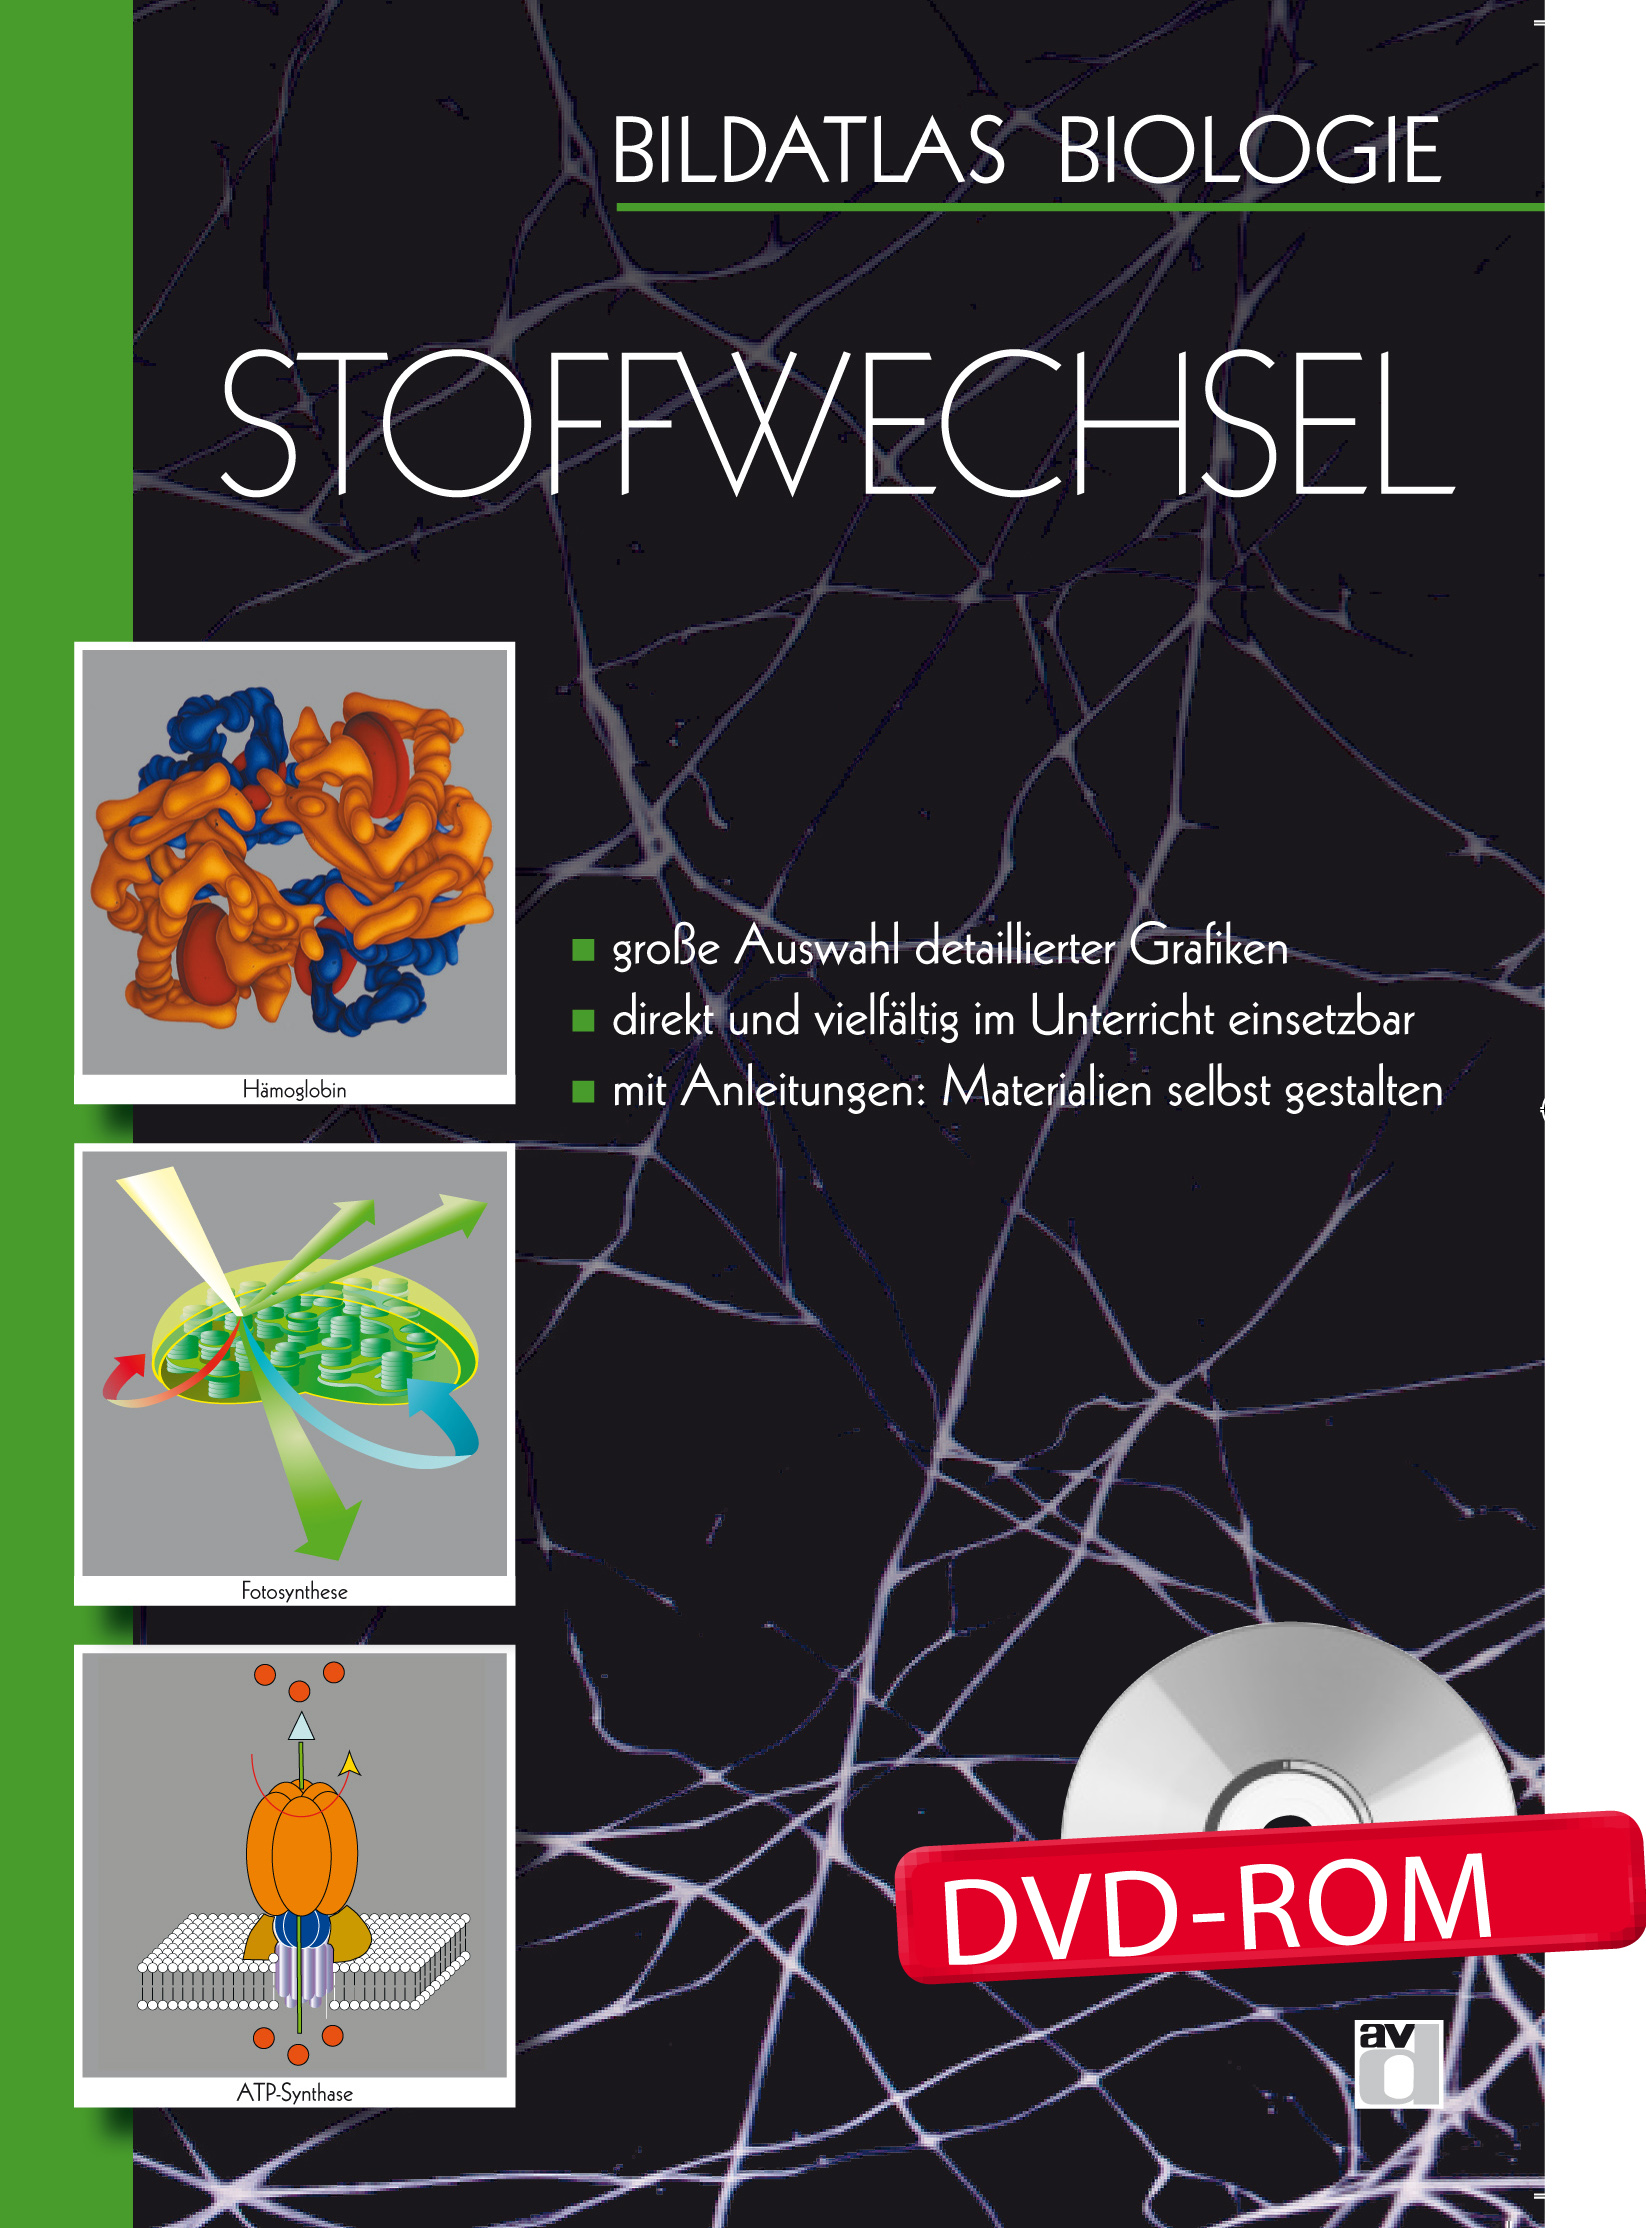 Bildatlas Biologie Dvd 4 Friedrich Verlag De Shop